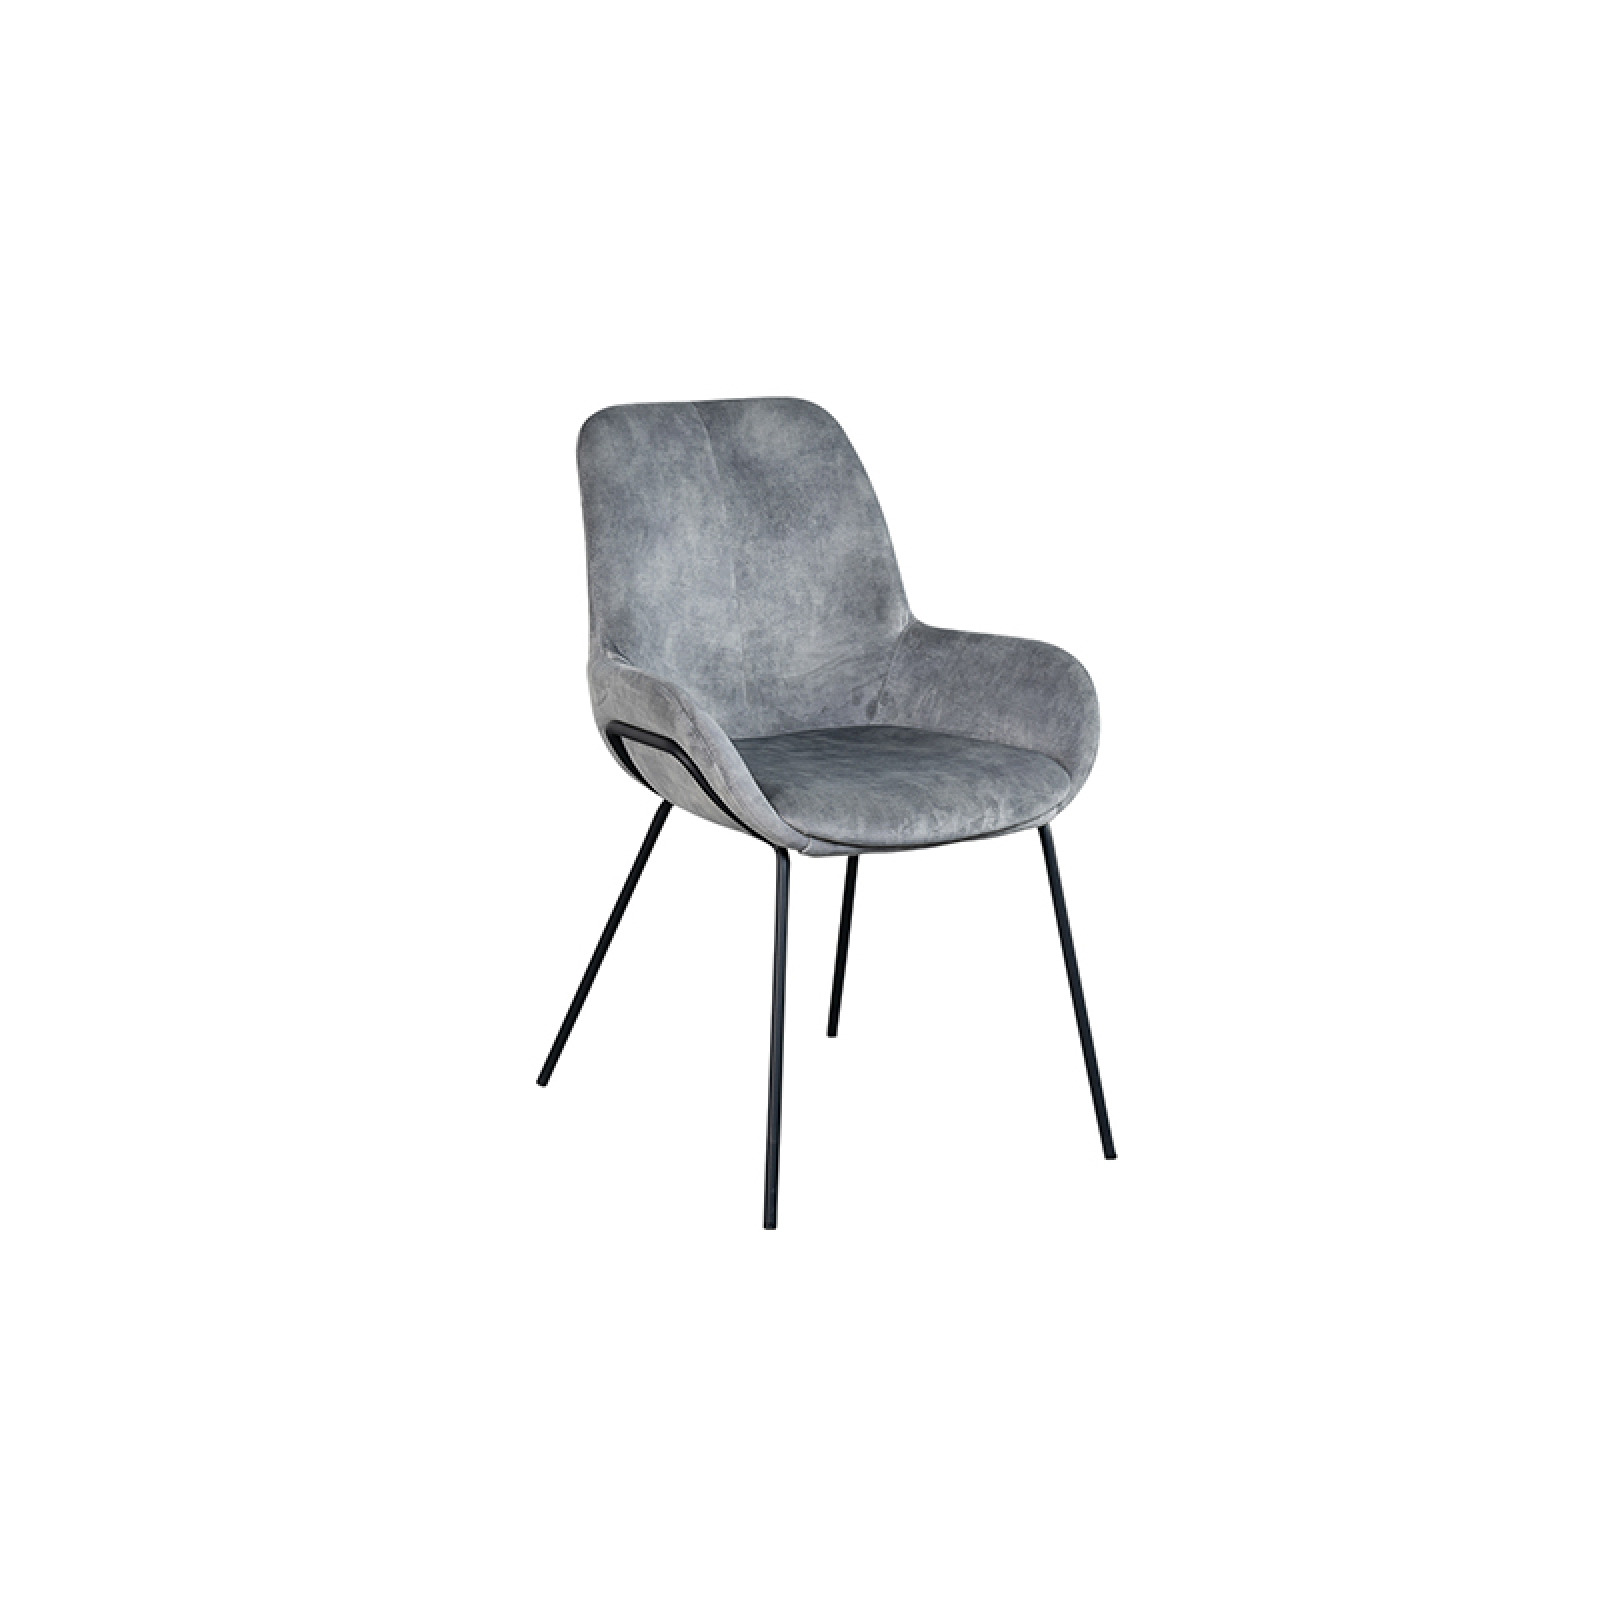 Livingston grey chair